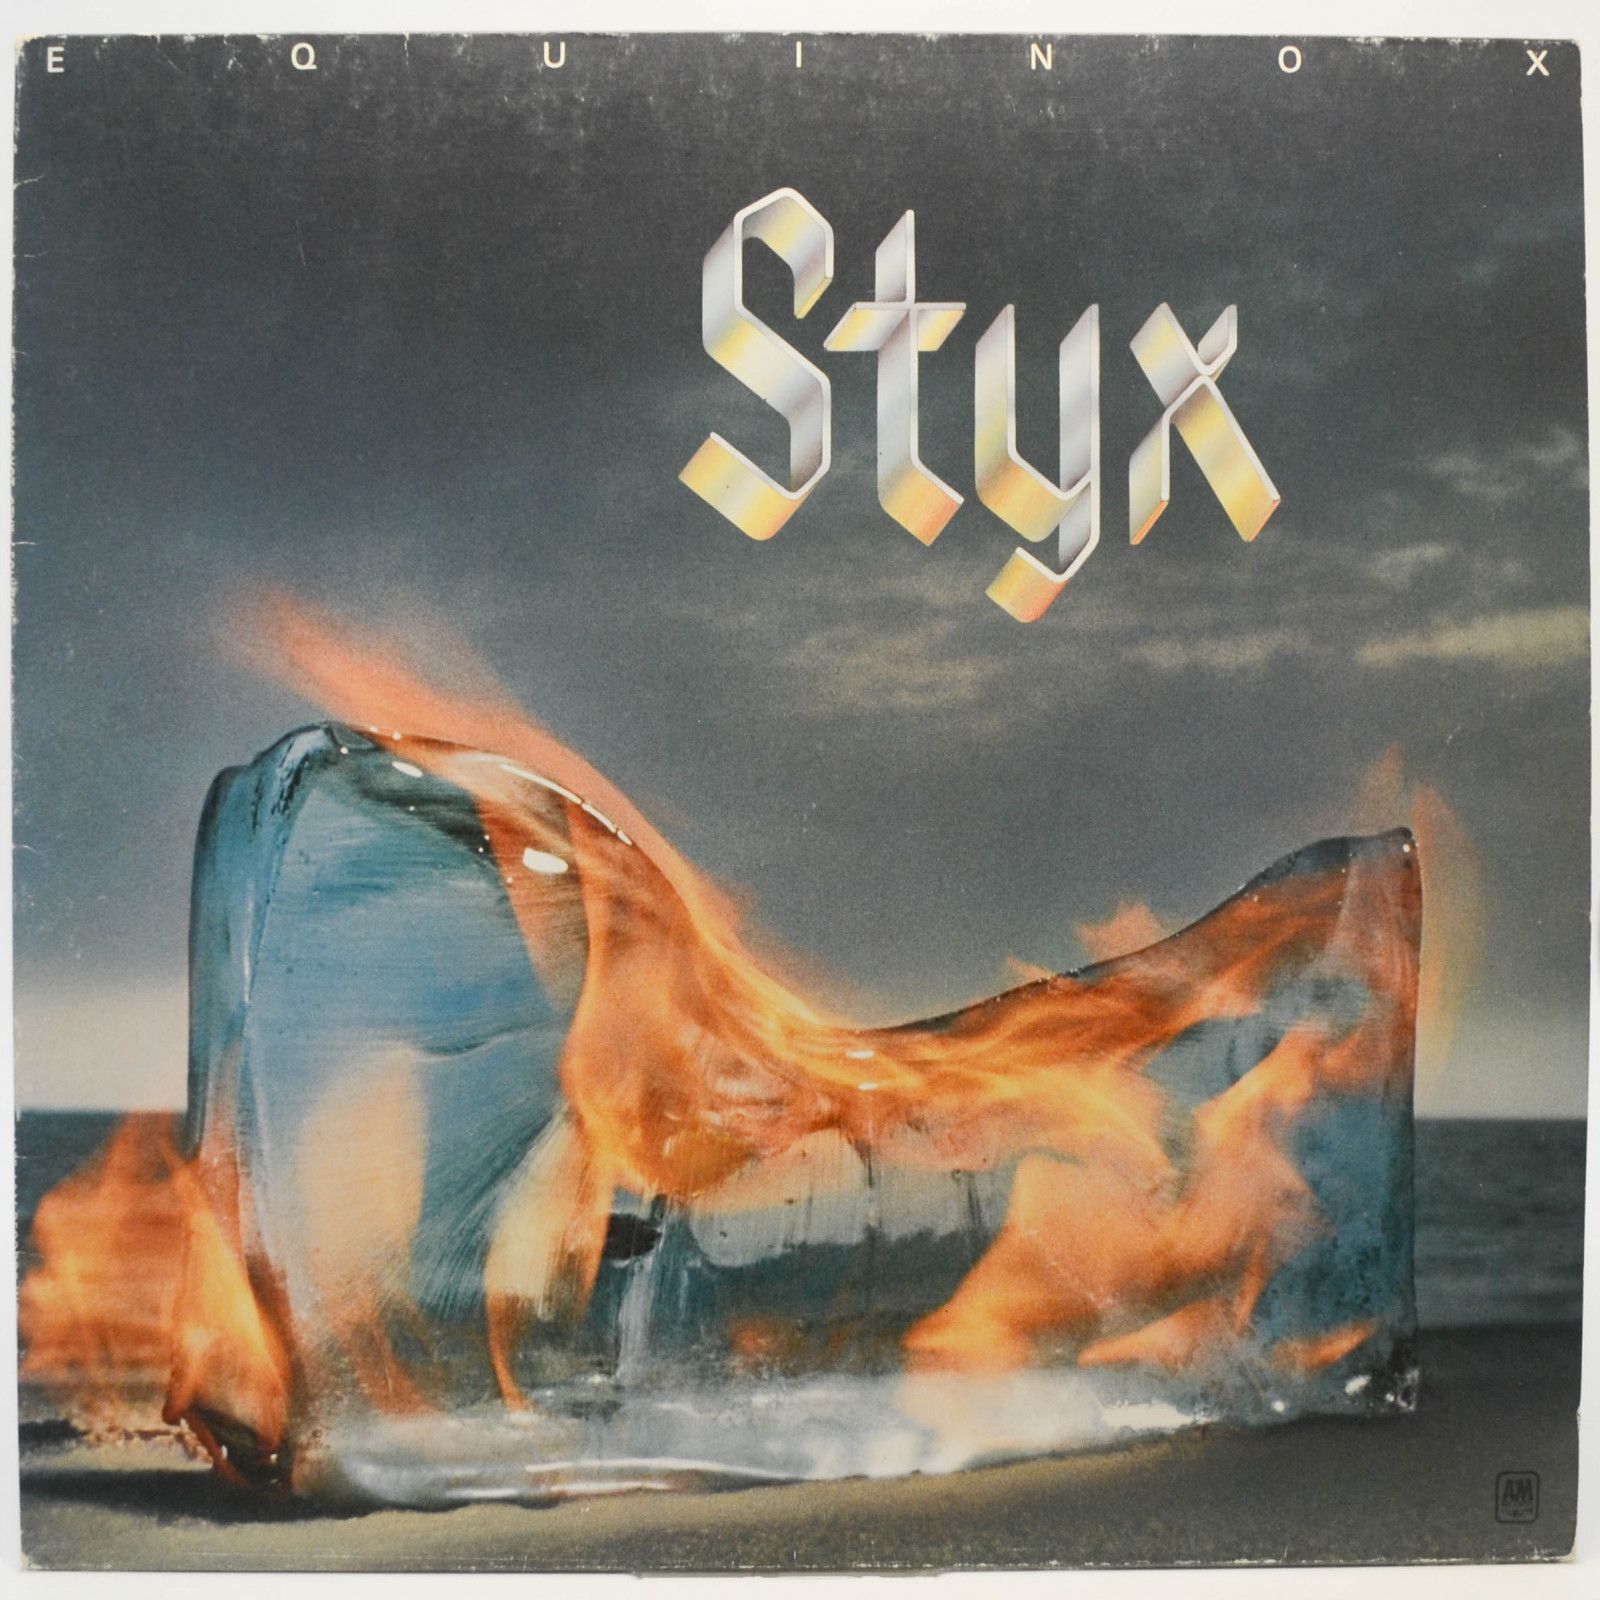 Styx — Equinox, 1976